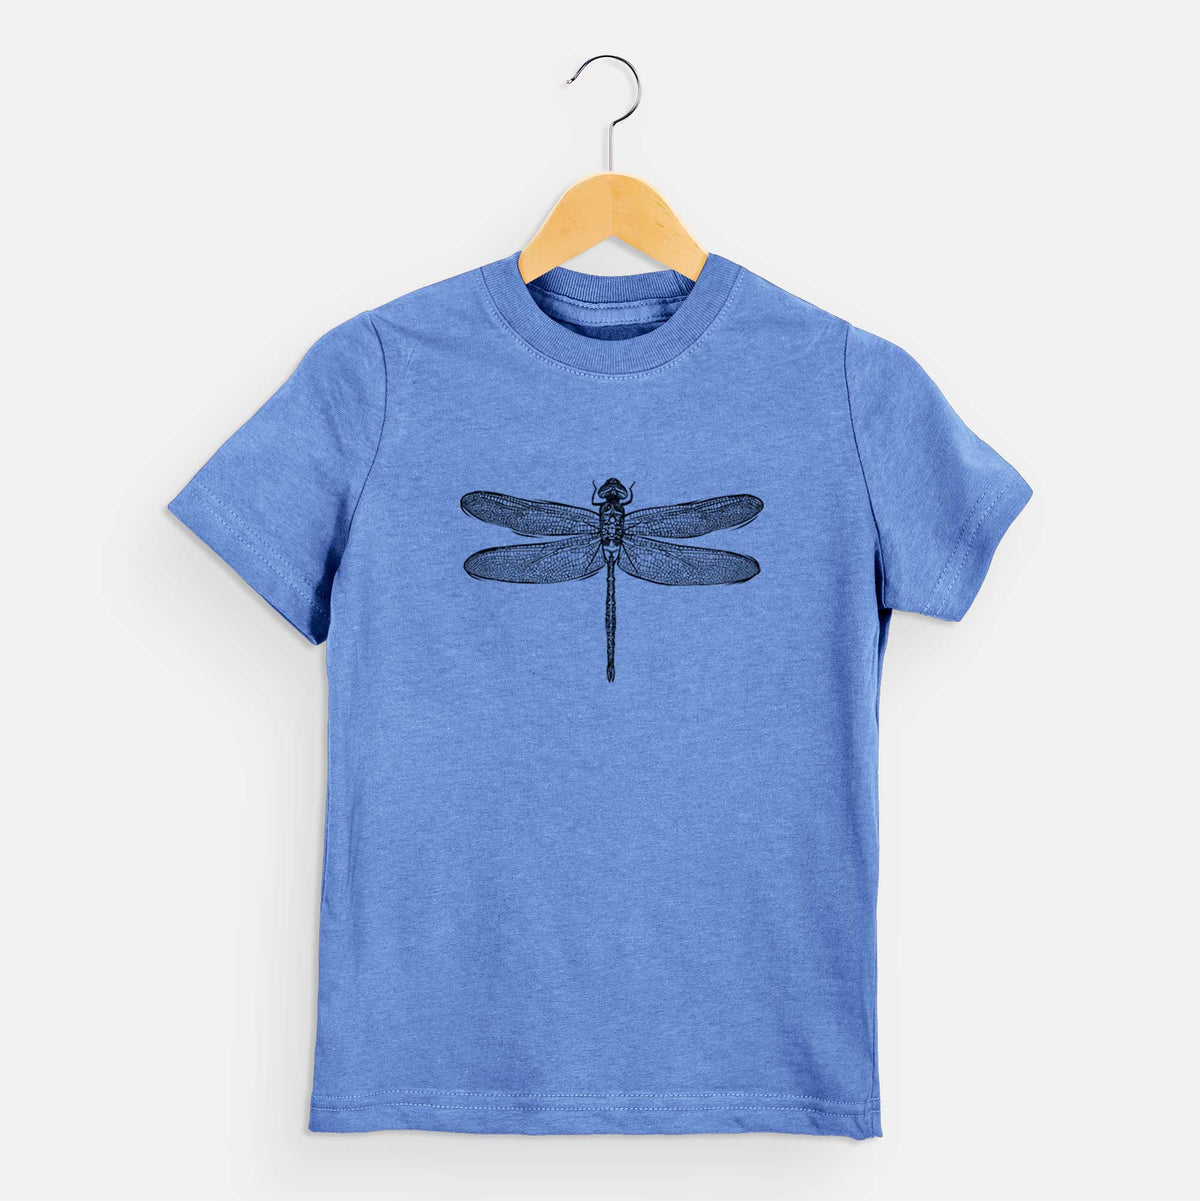 Anax Junius - Green Darner Dragonfly - Kids Shirt